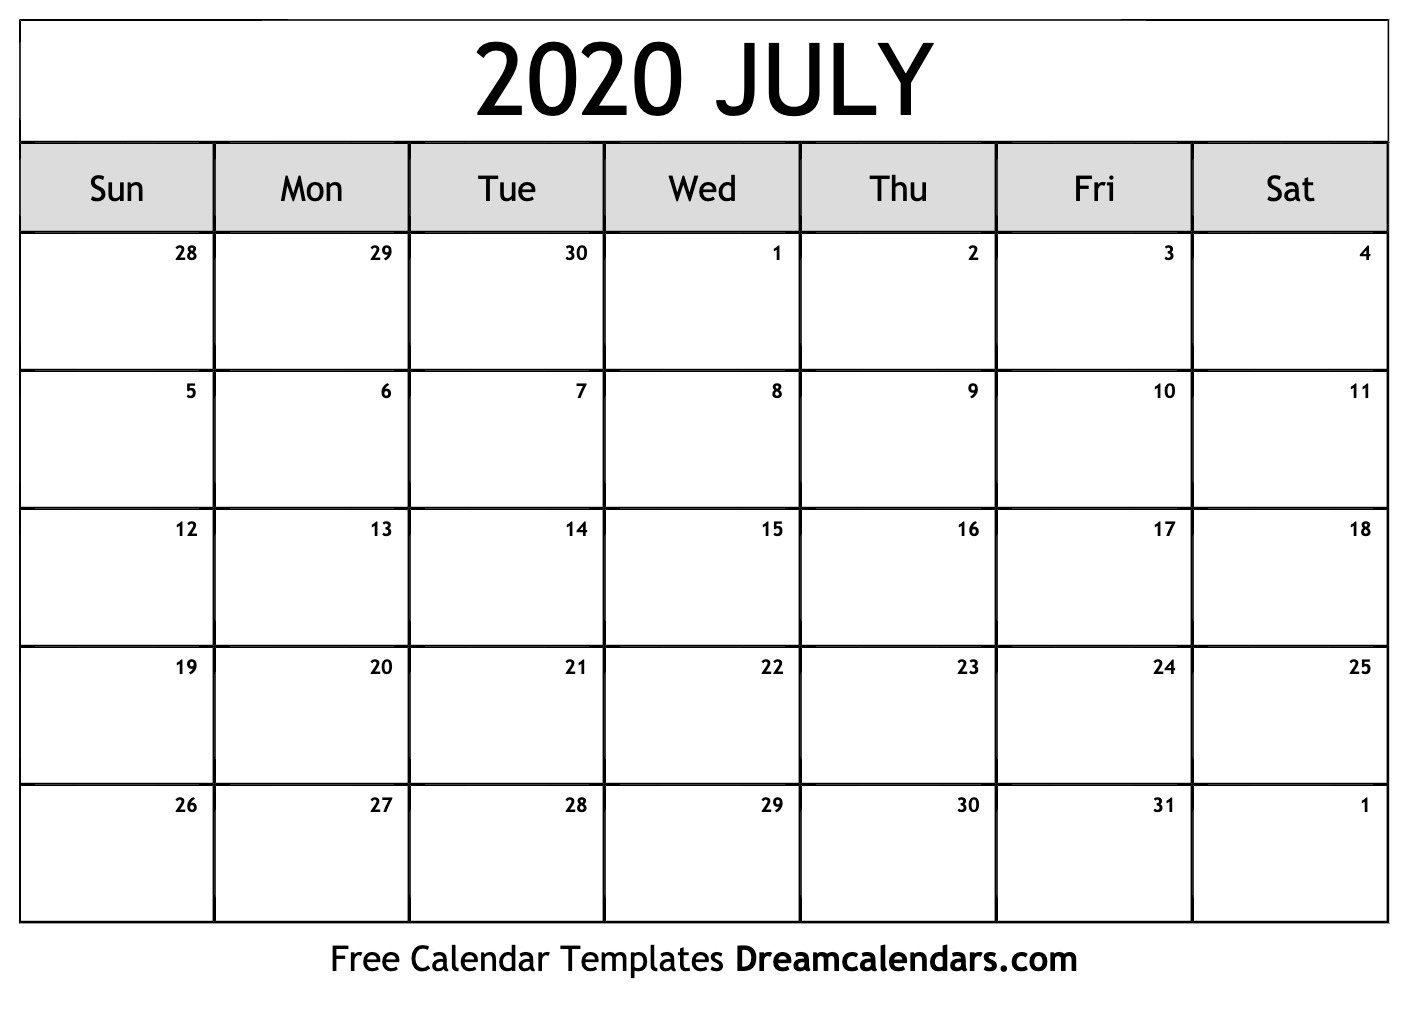 Free Online Printable Calendar 2020 - Wpa.wpart.co